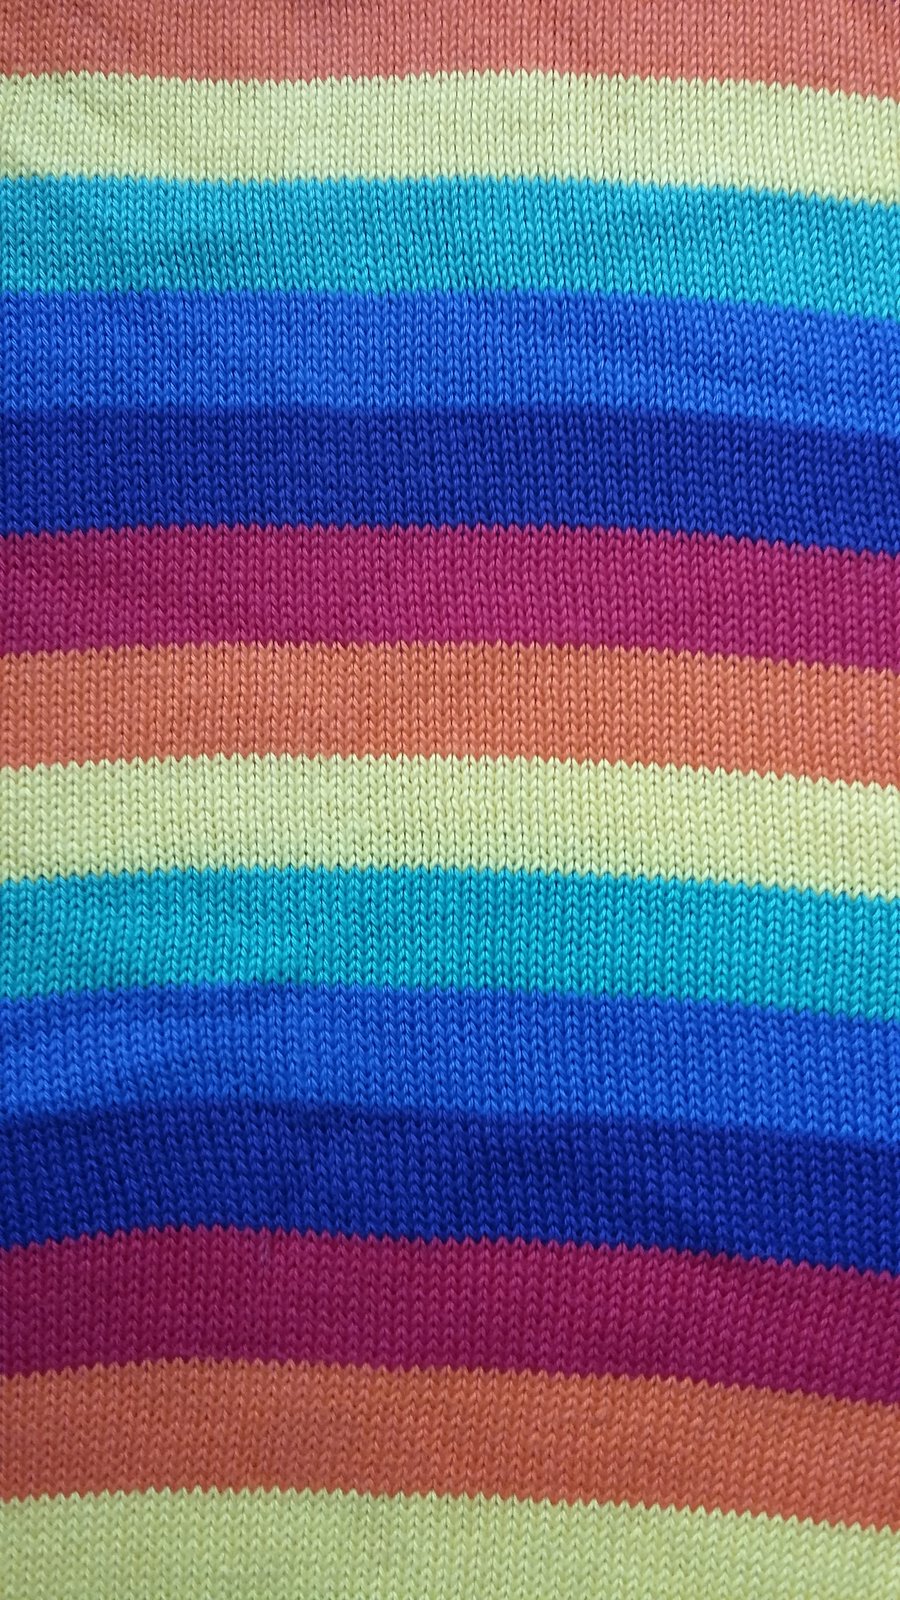 Rainbow stripe baby blanket